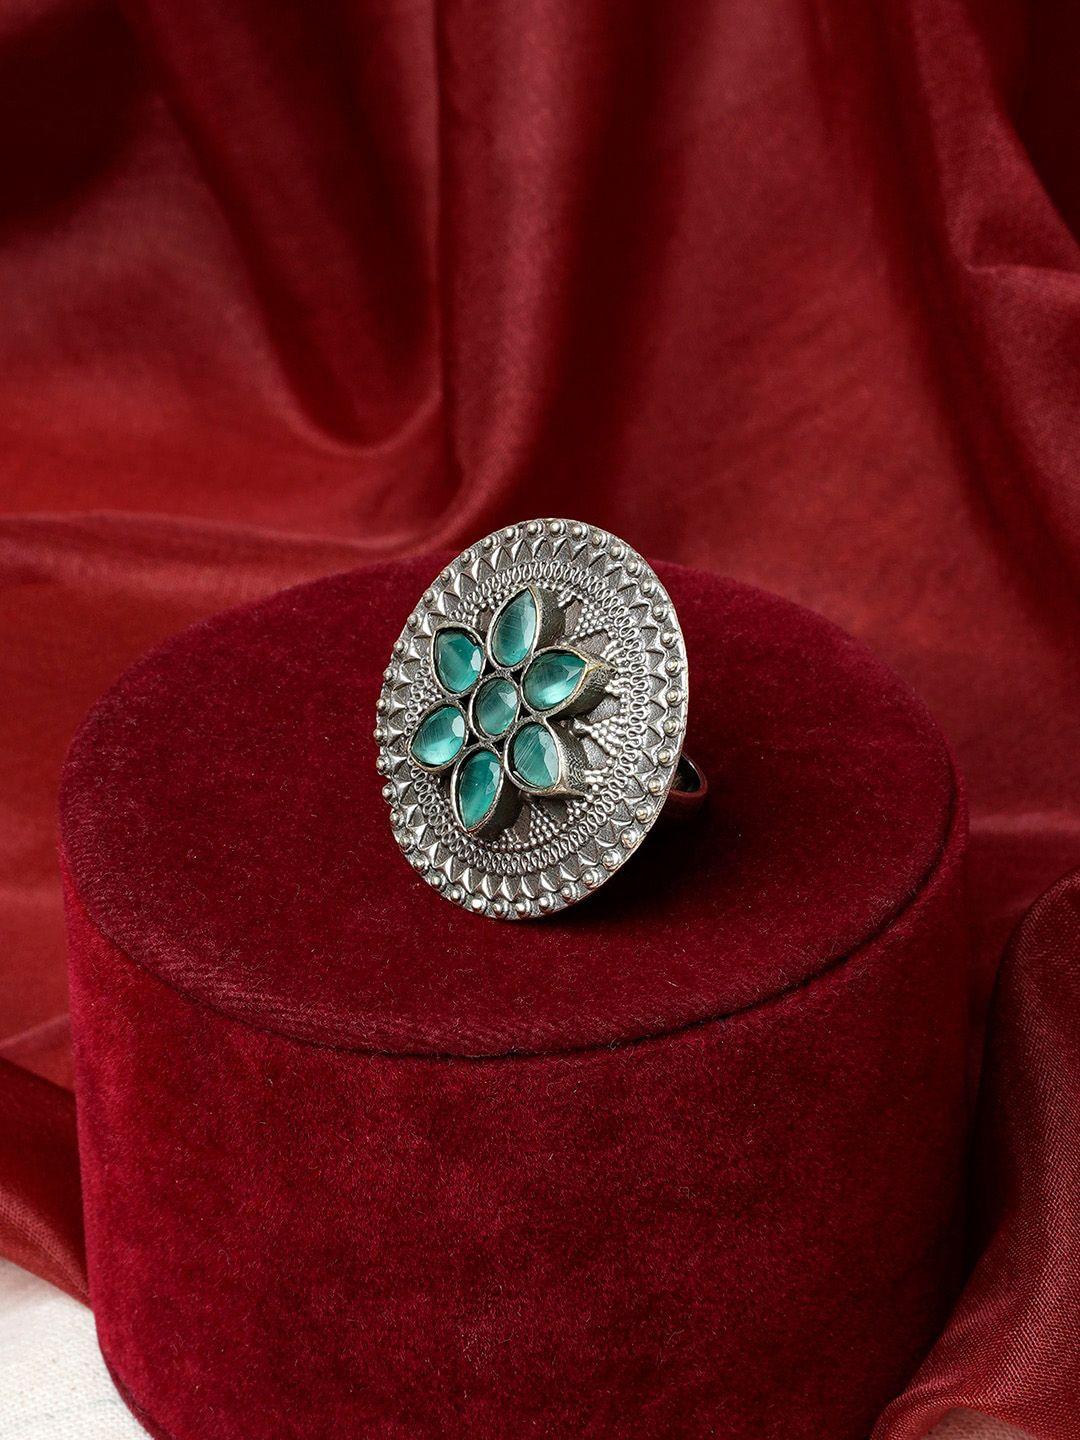 TEEJH Silver-Plated Stones Studded Oxidised Floral Statement Adjustable Finger Ring